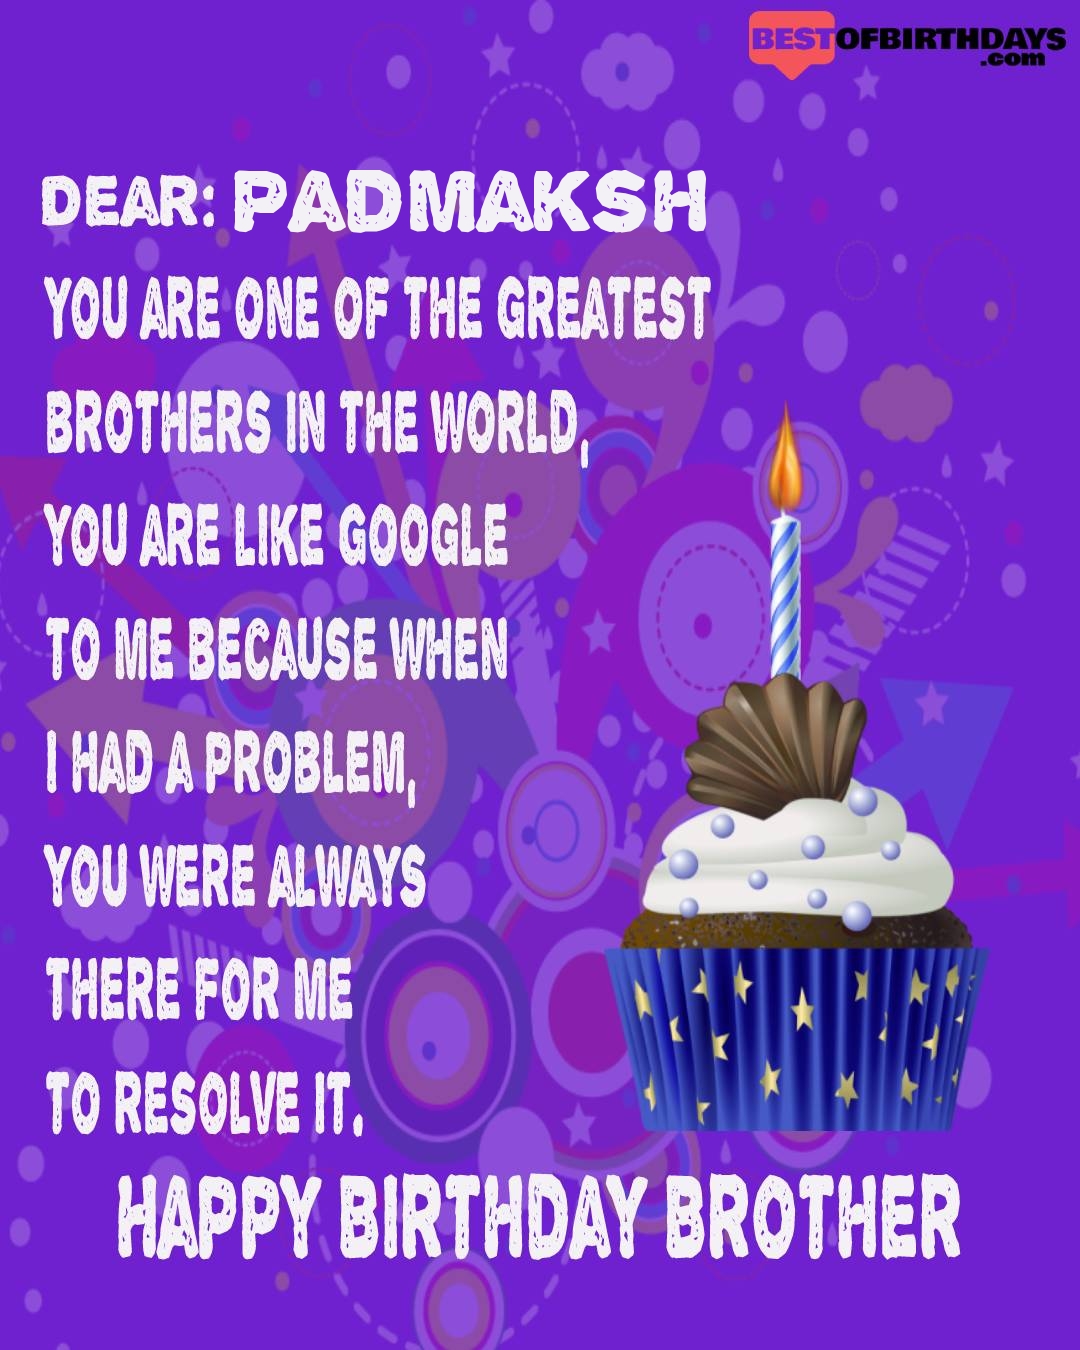 Happy birthday padmaksh bhai brother bro